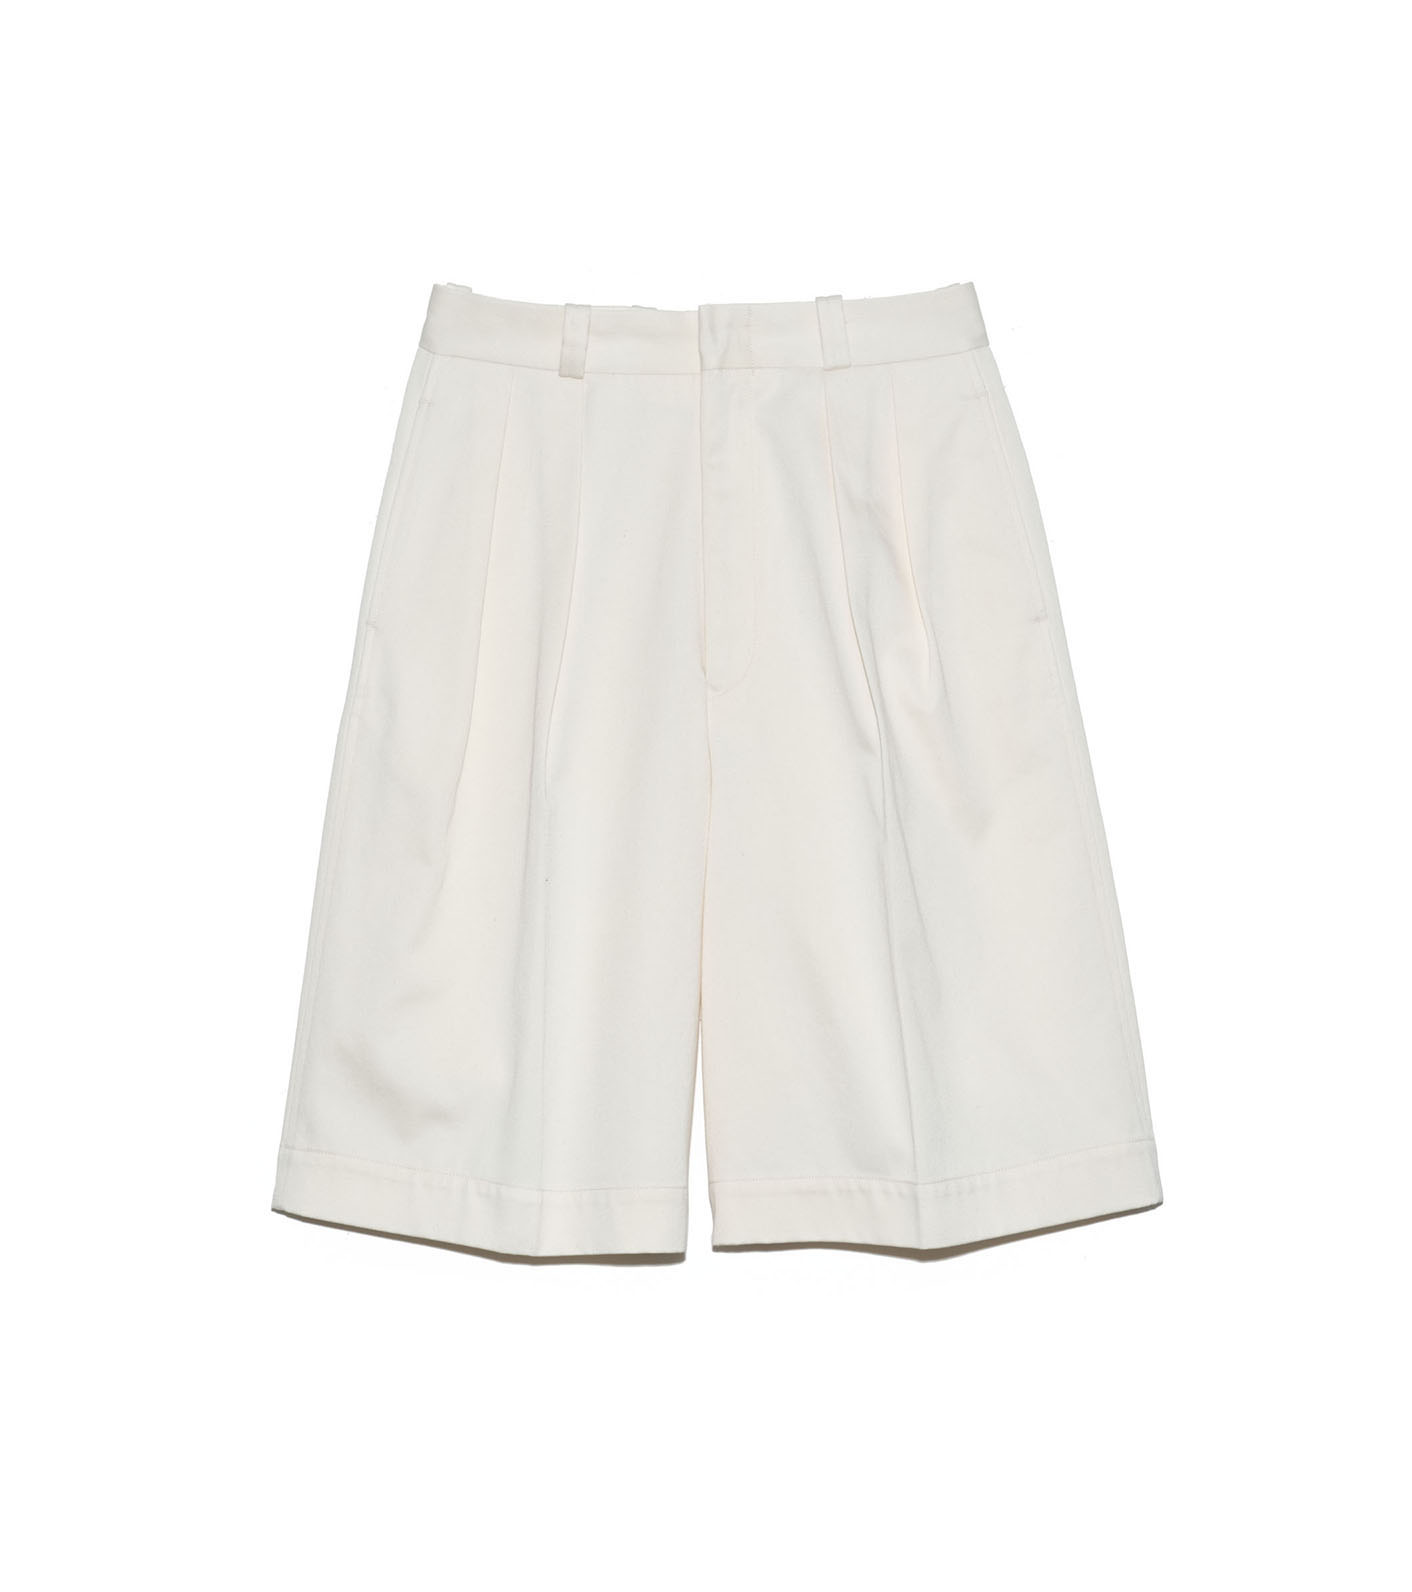 nanamica / Double Pleat Chino Shorts